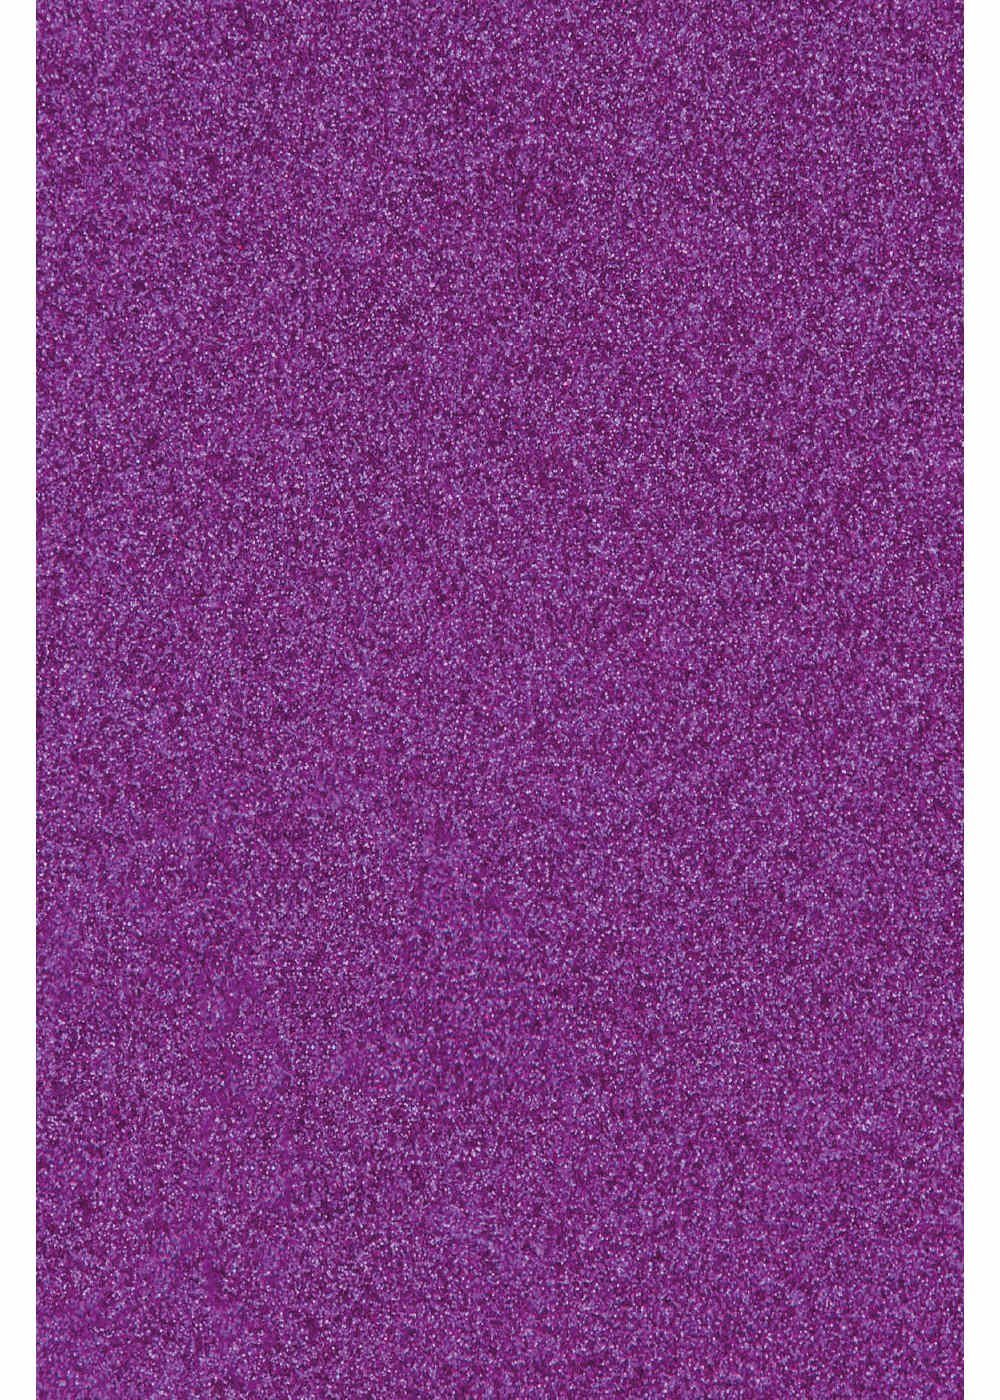 Hilltop Transparentpapier Glitzer Transferfolie/Textilfolie zum Aufbügeln, perfekt zum Plottern Purple